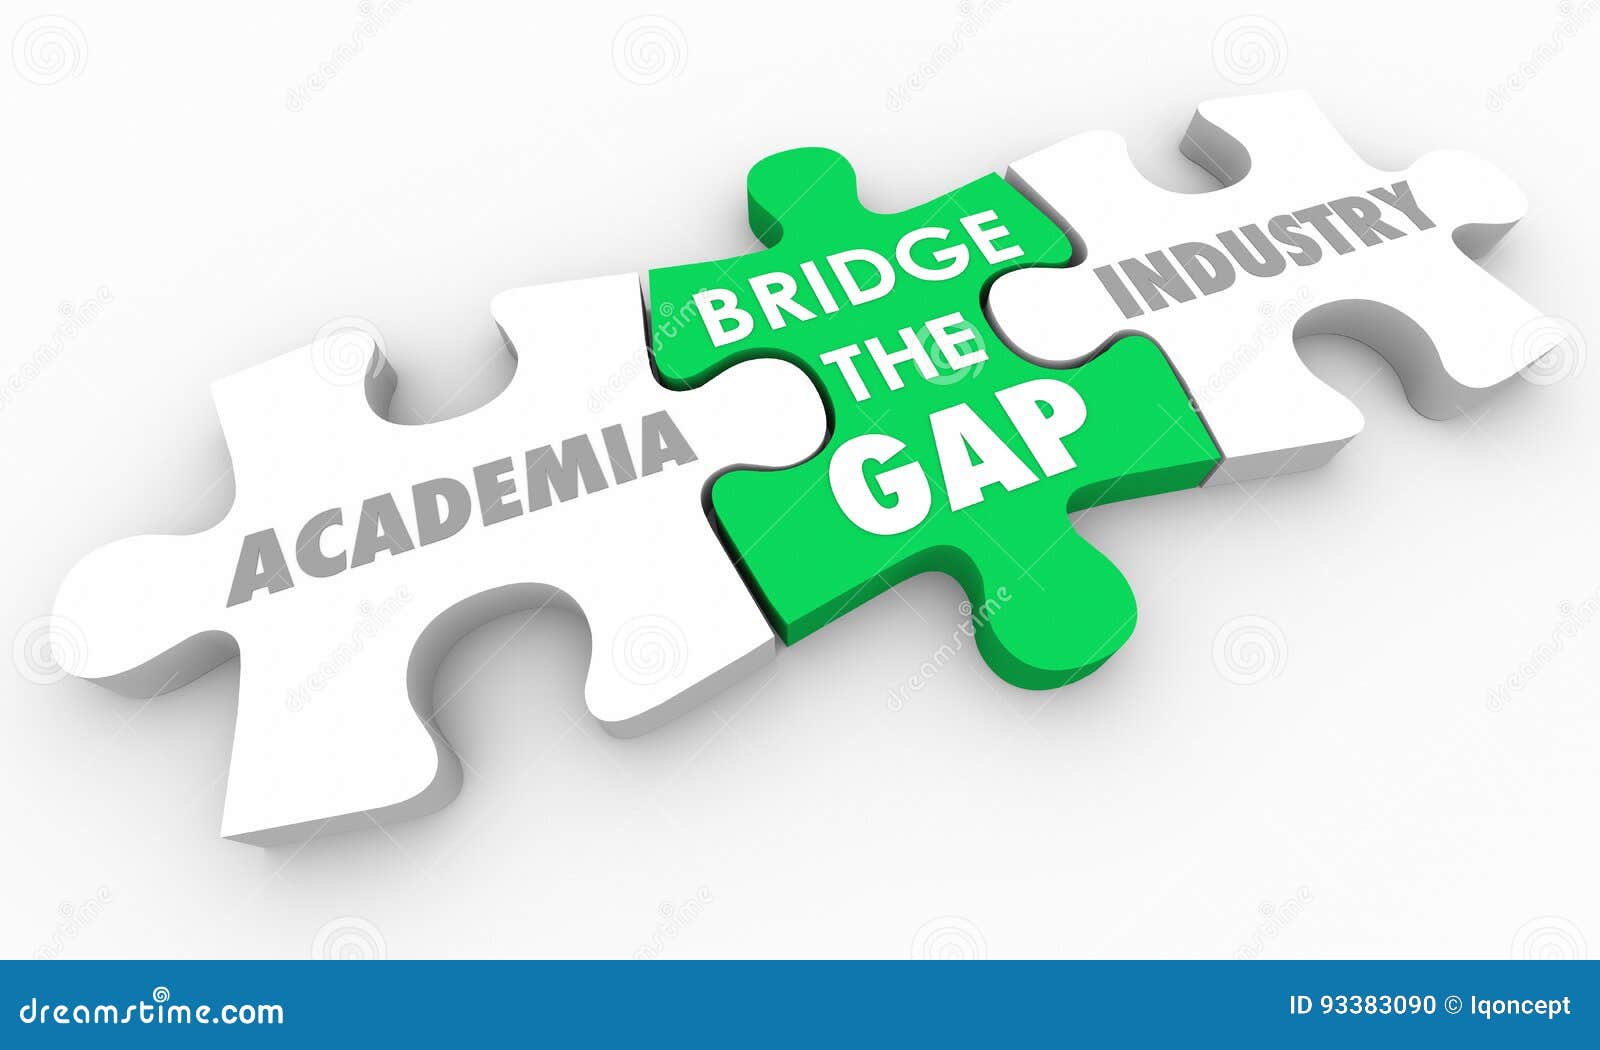 bridge gap between academia and industry puzzle